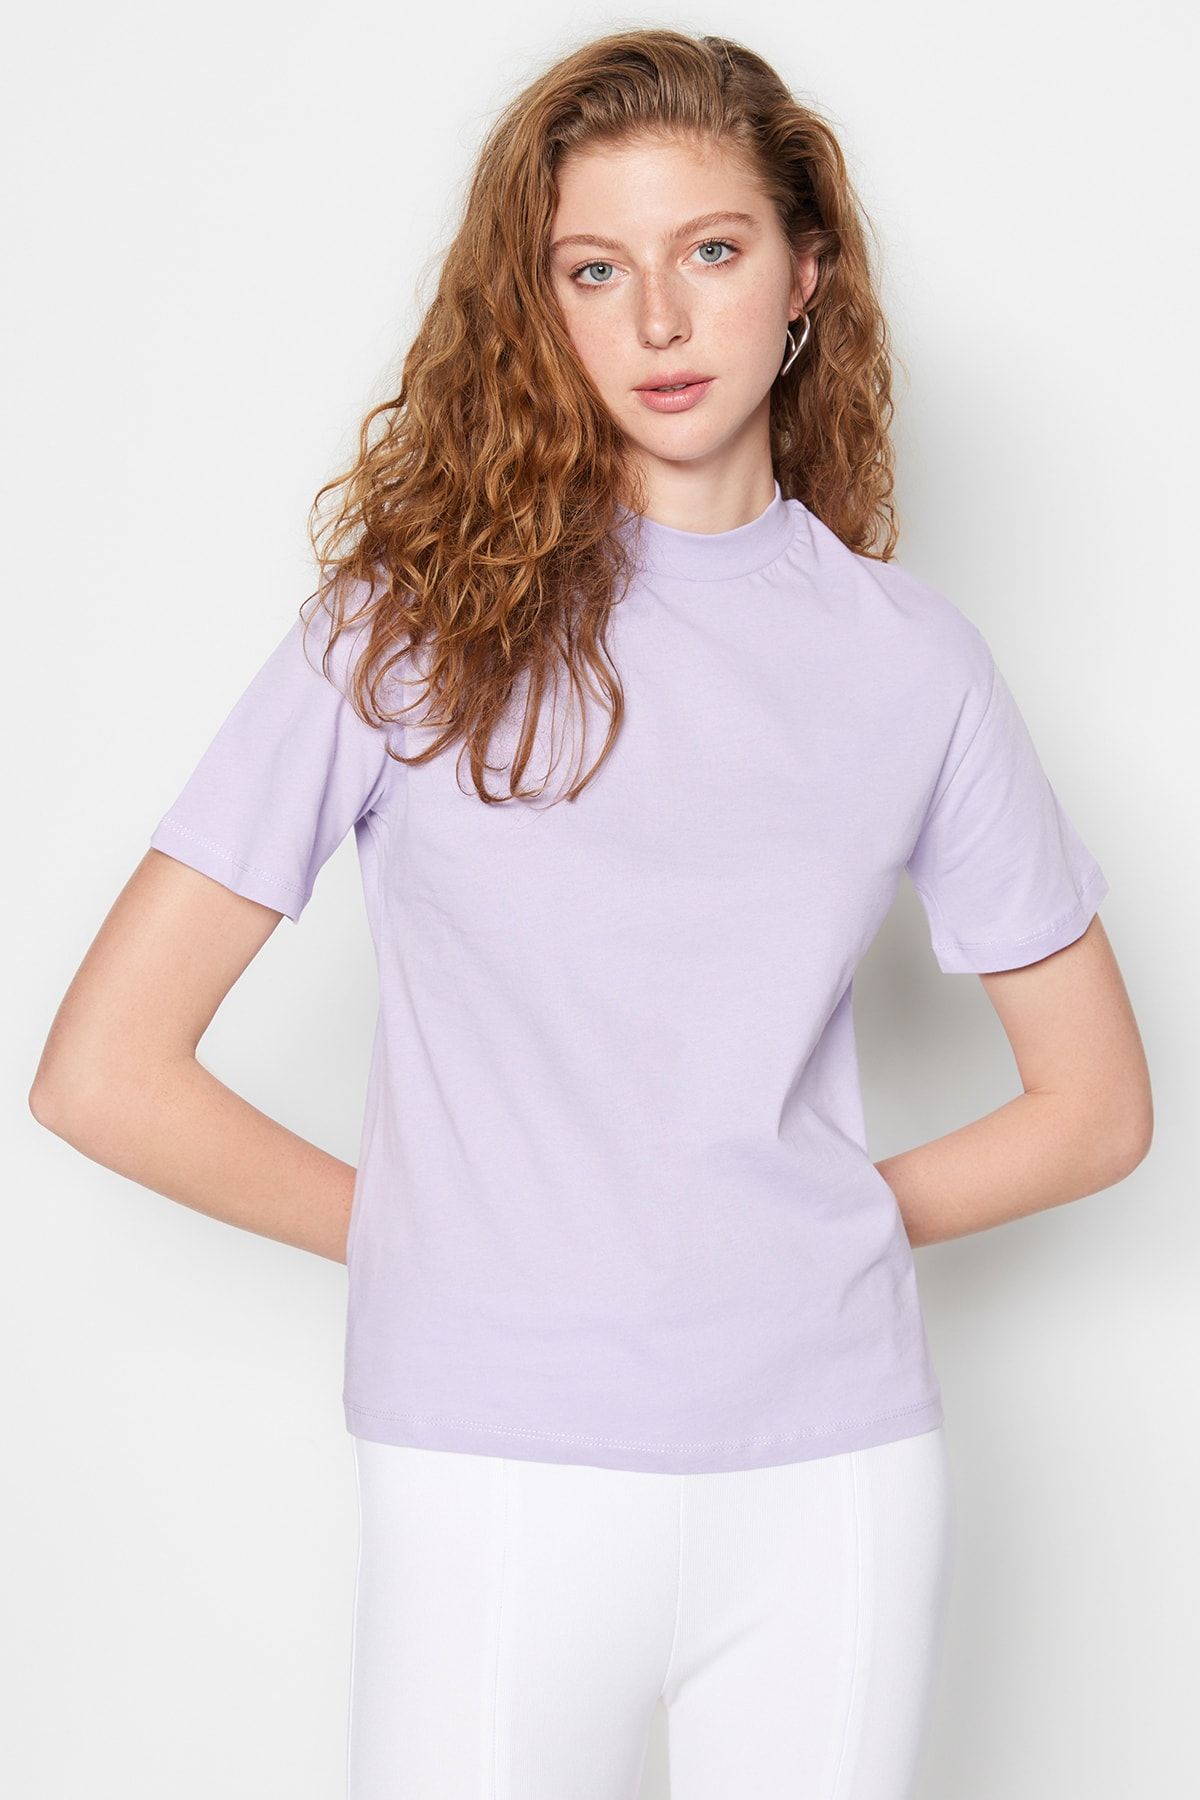 SKECHERS Purple T-Shirts